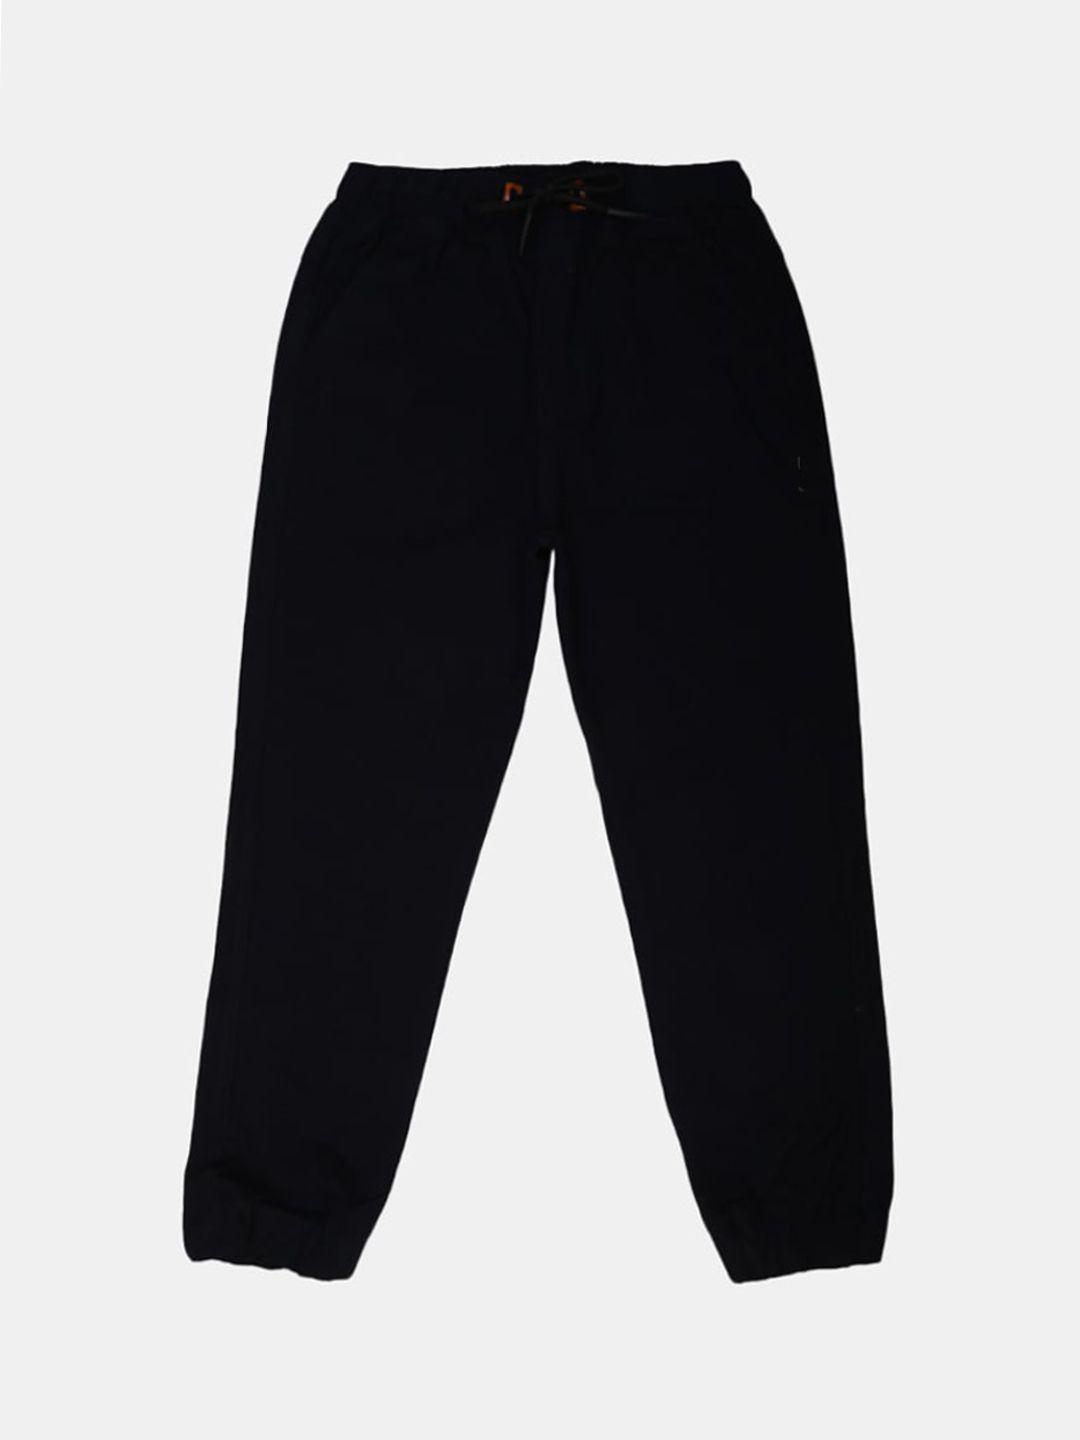 v-mart boys navy blue classic joggers trousers